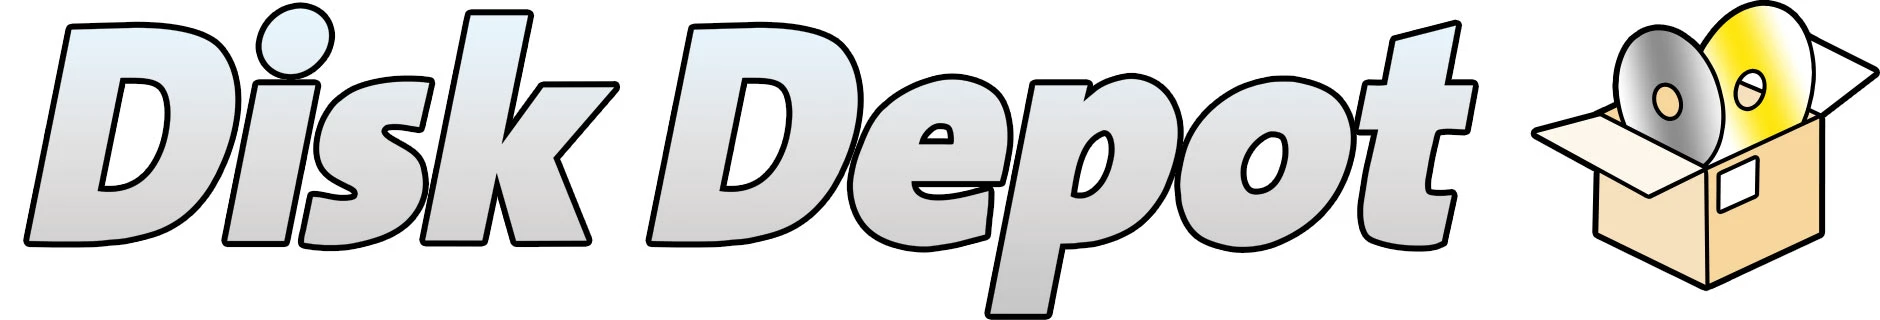  Disk Depot Promo Code